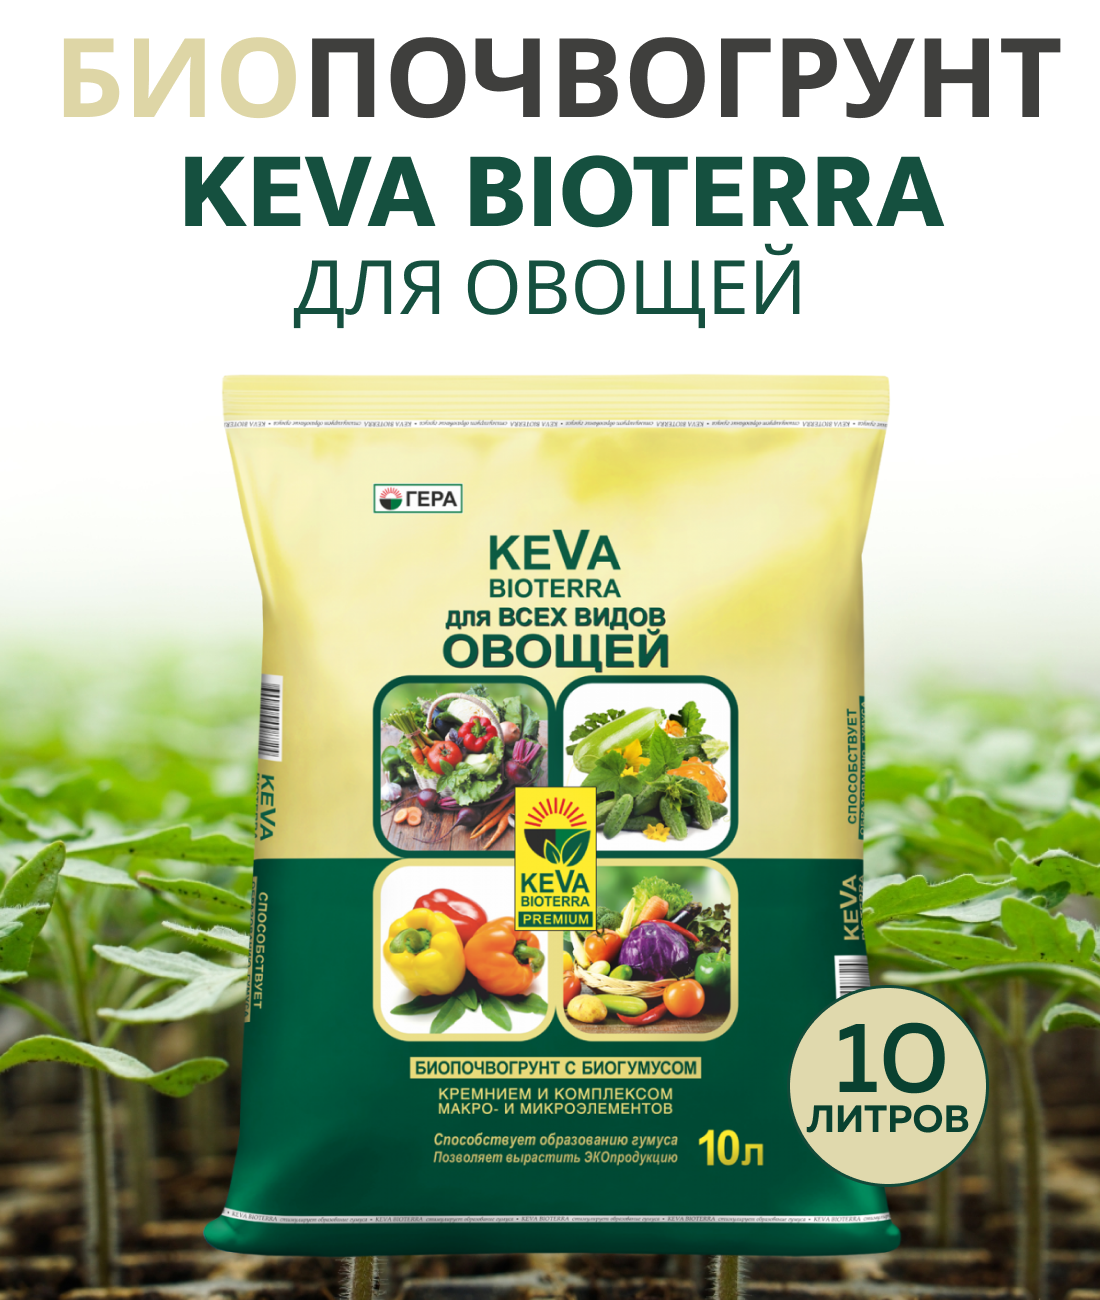 Биогрунт "KEVA BIOTERRA" для овощей, 10 литров